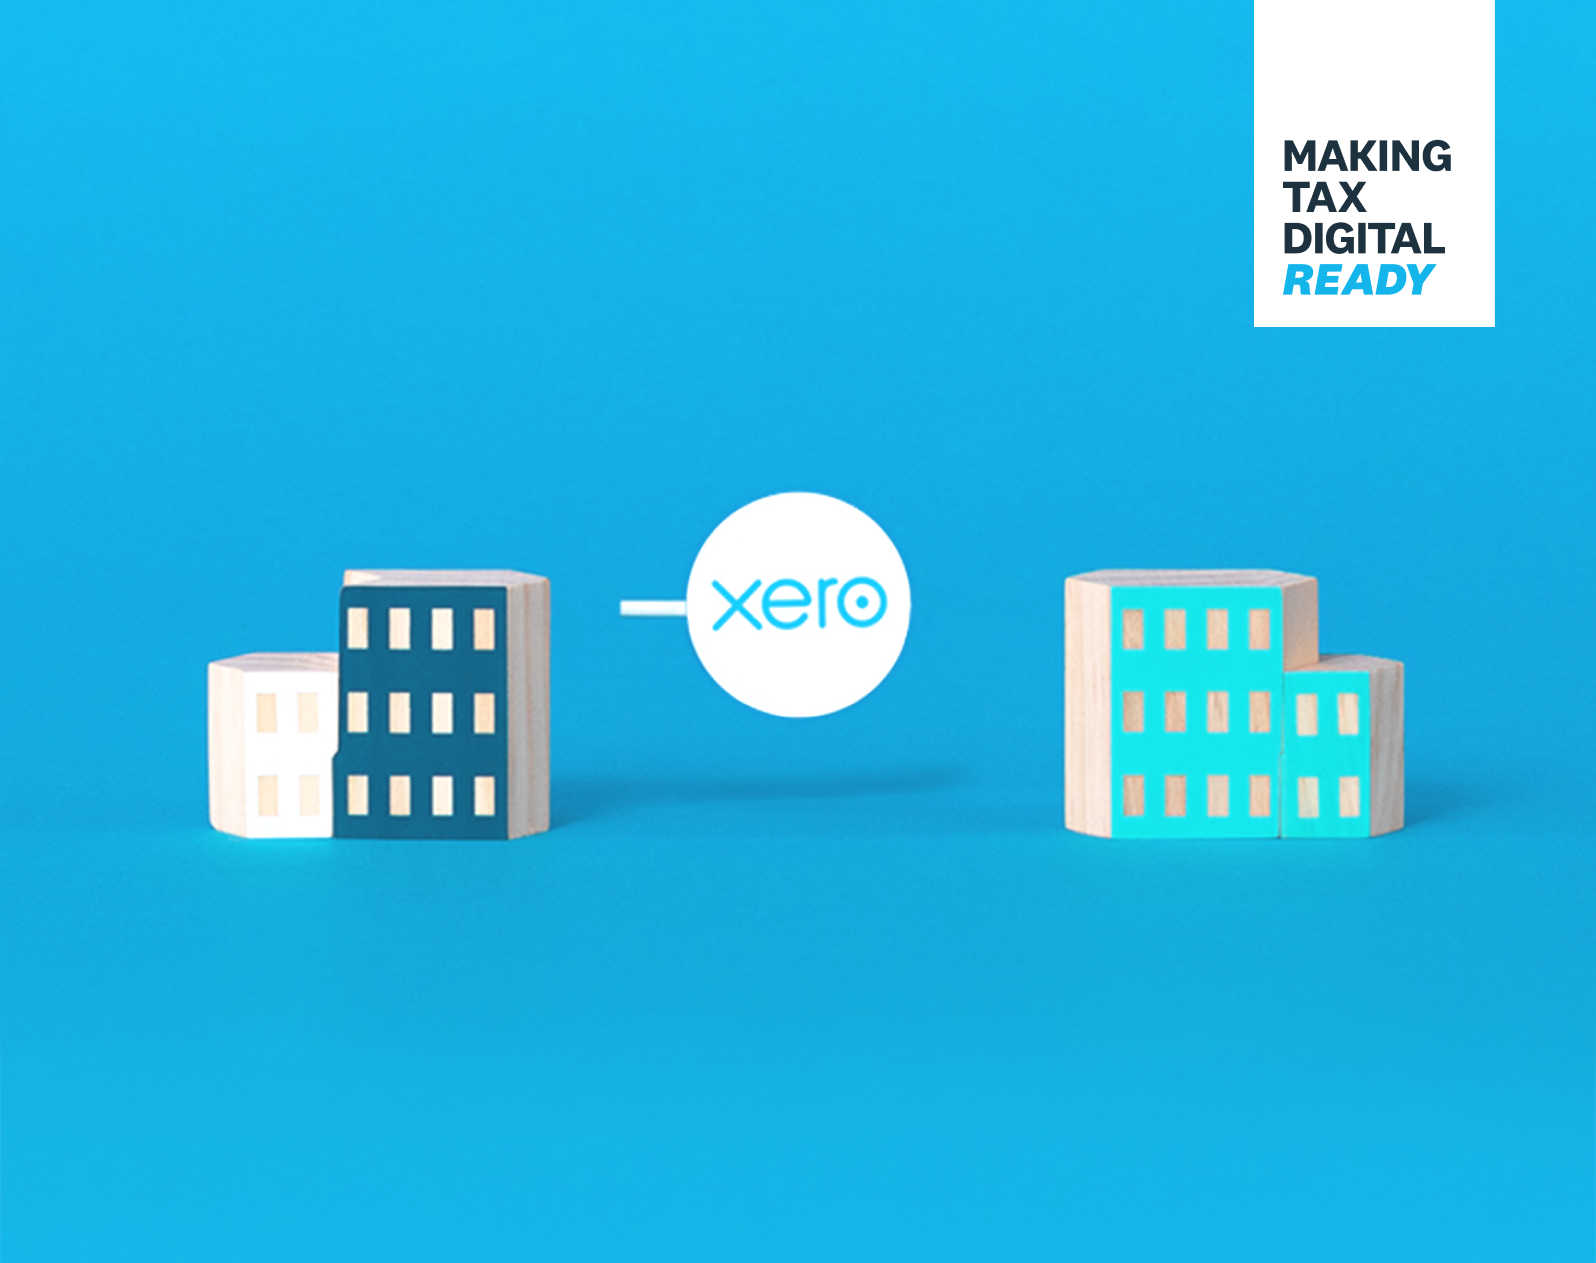 Illustrated buildings with Xero logo in between.